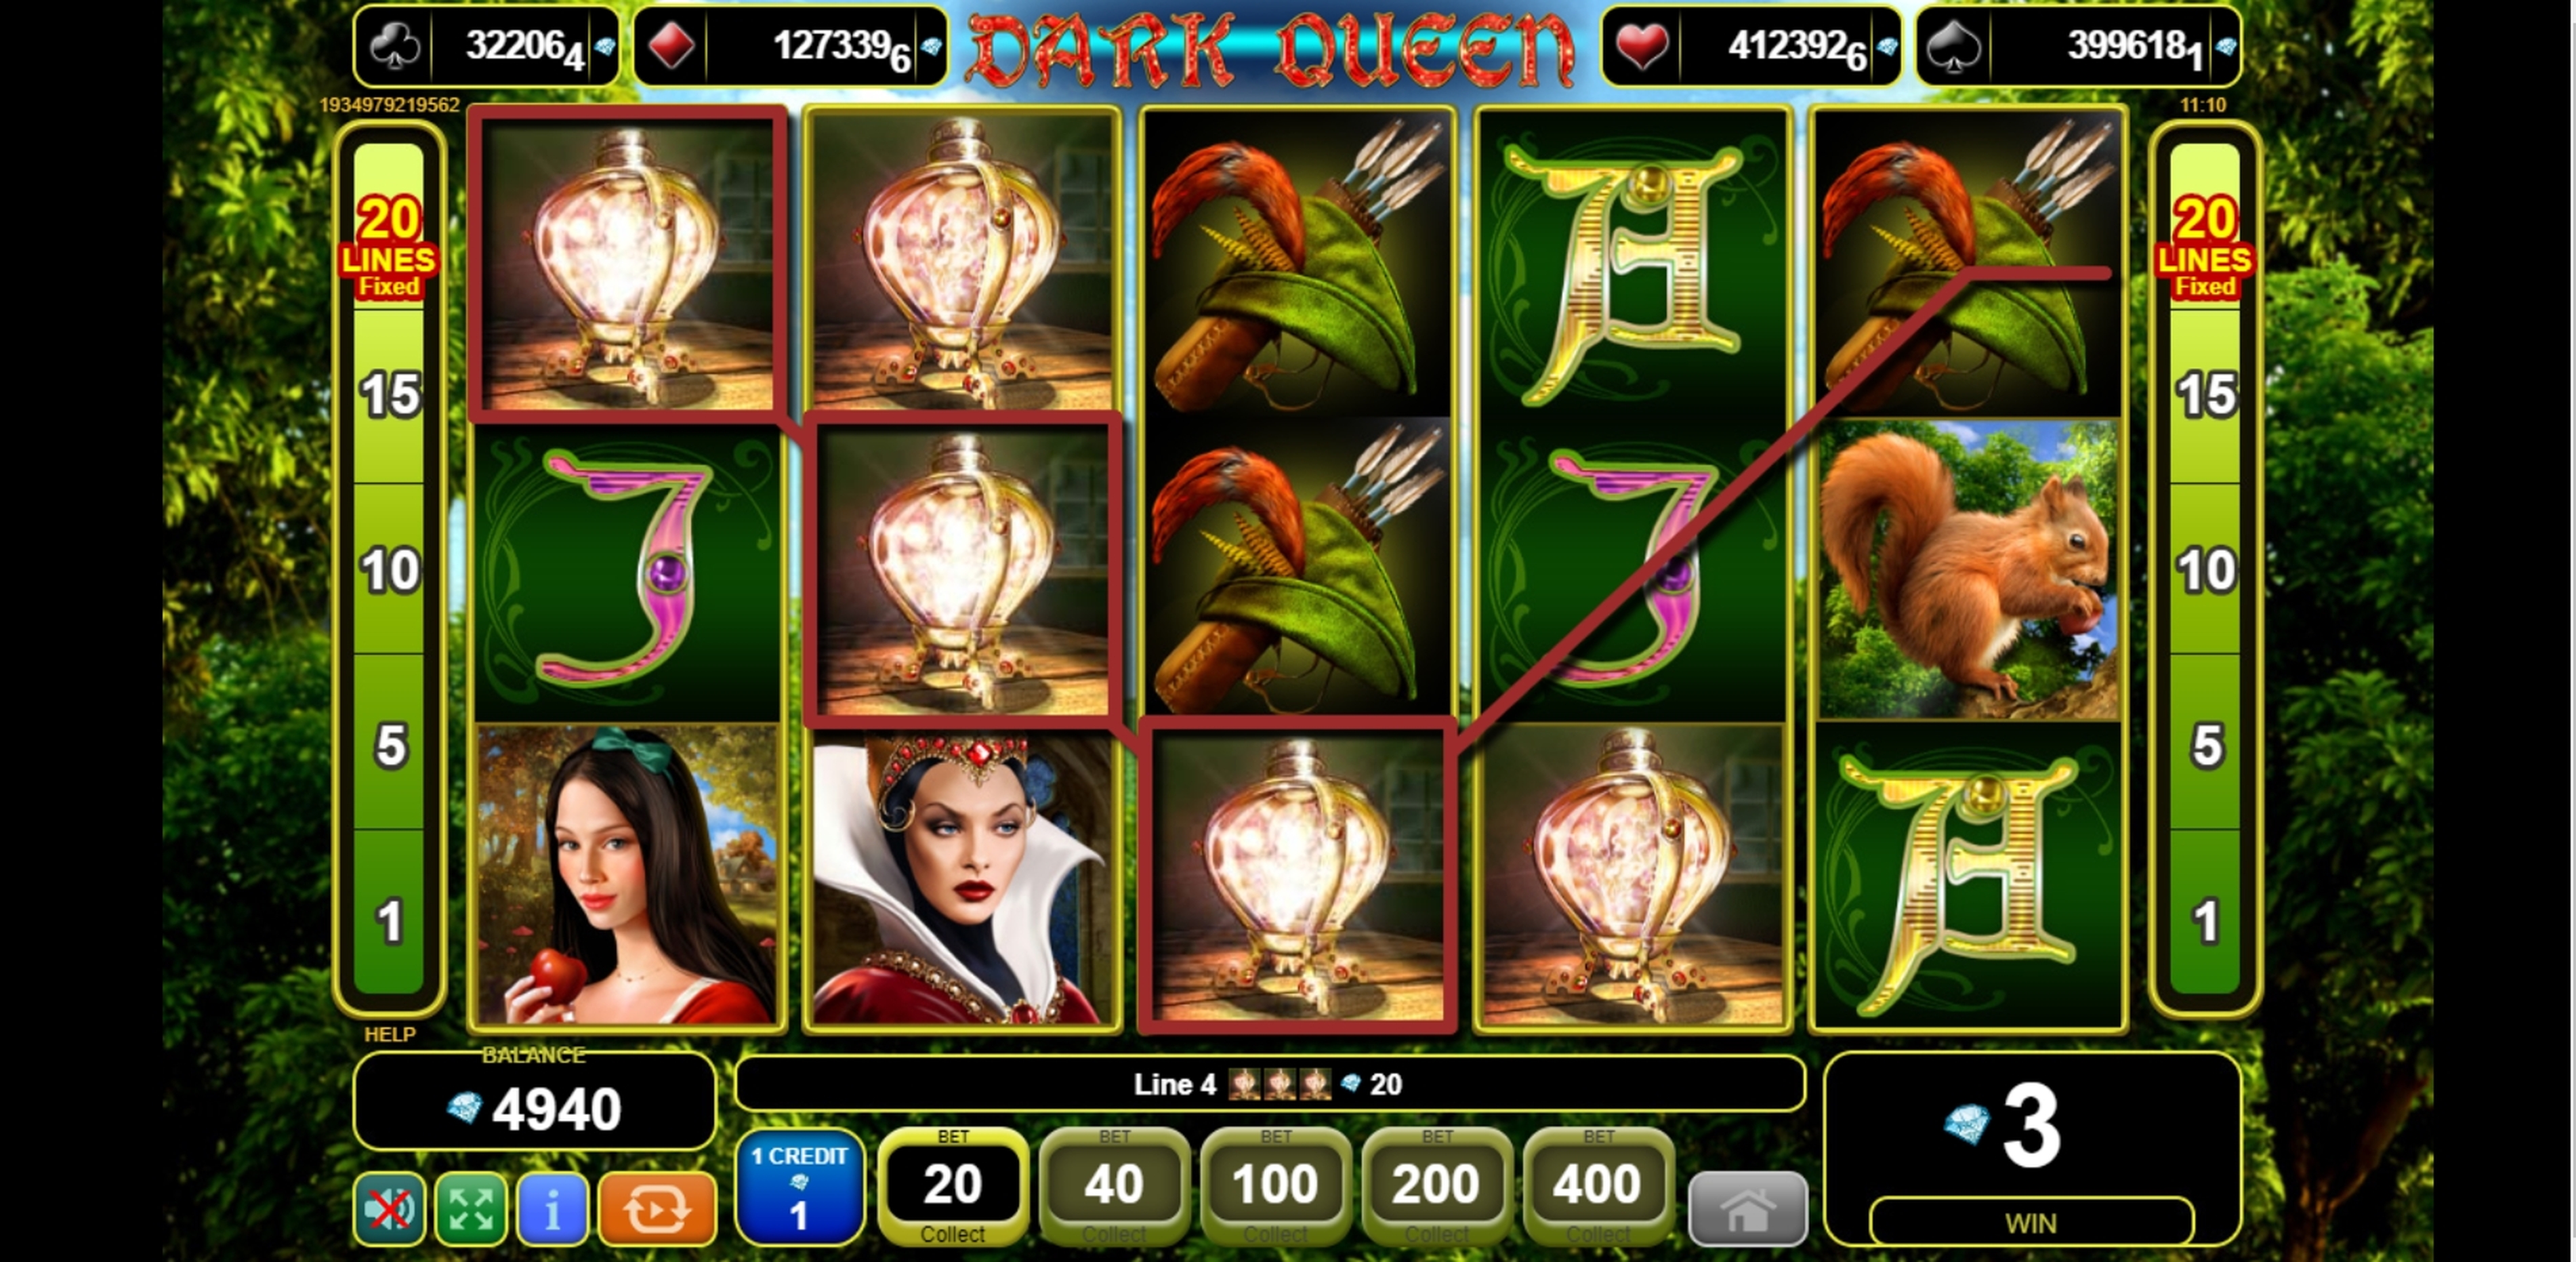 Win Money in Dark Queen Free Slot Game by EGT